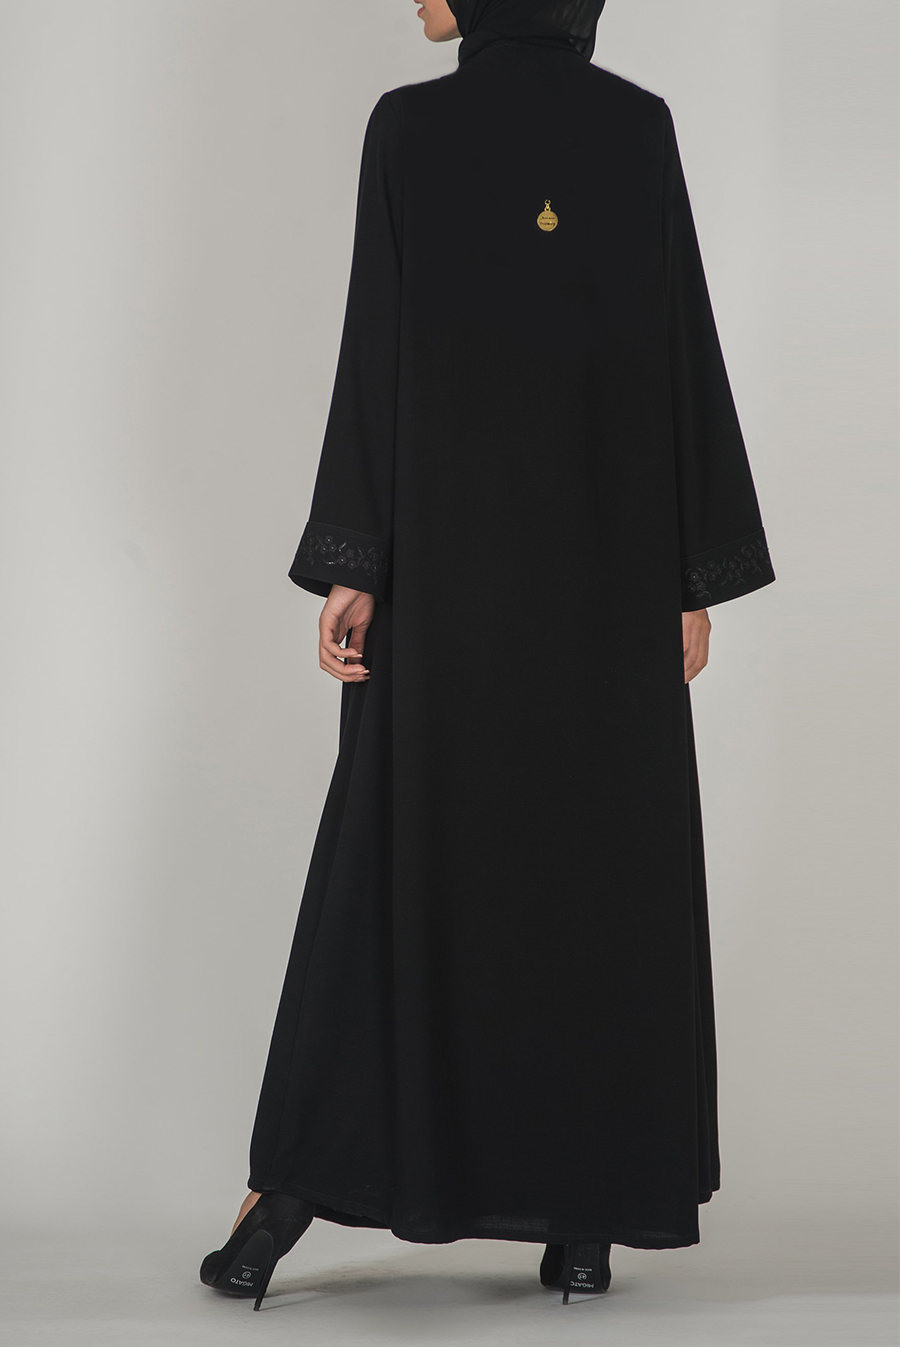 Classy Black Abaya - thowby - Dubai online abaya shops